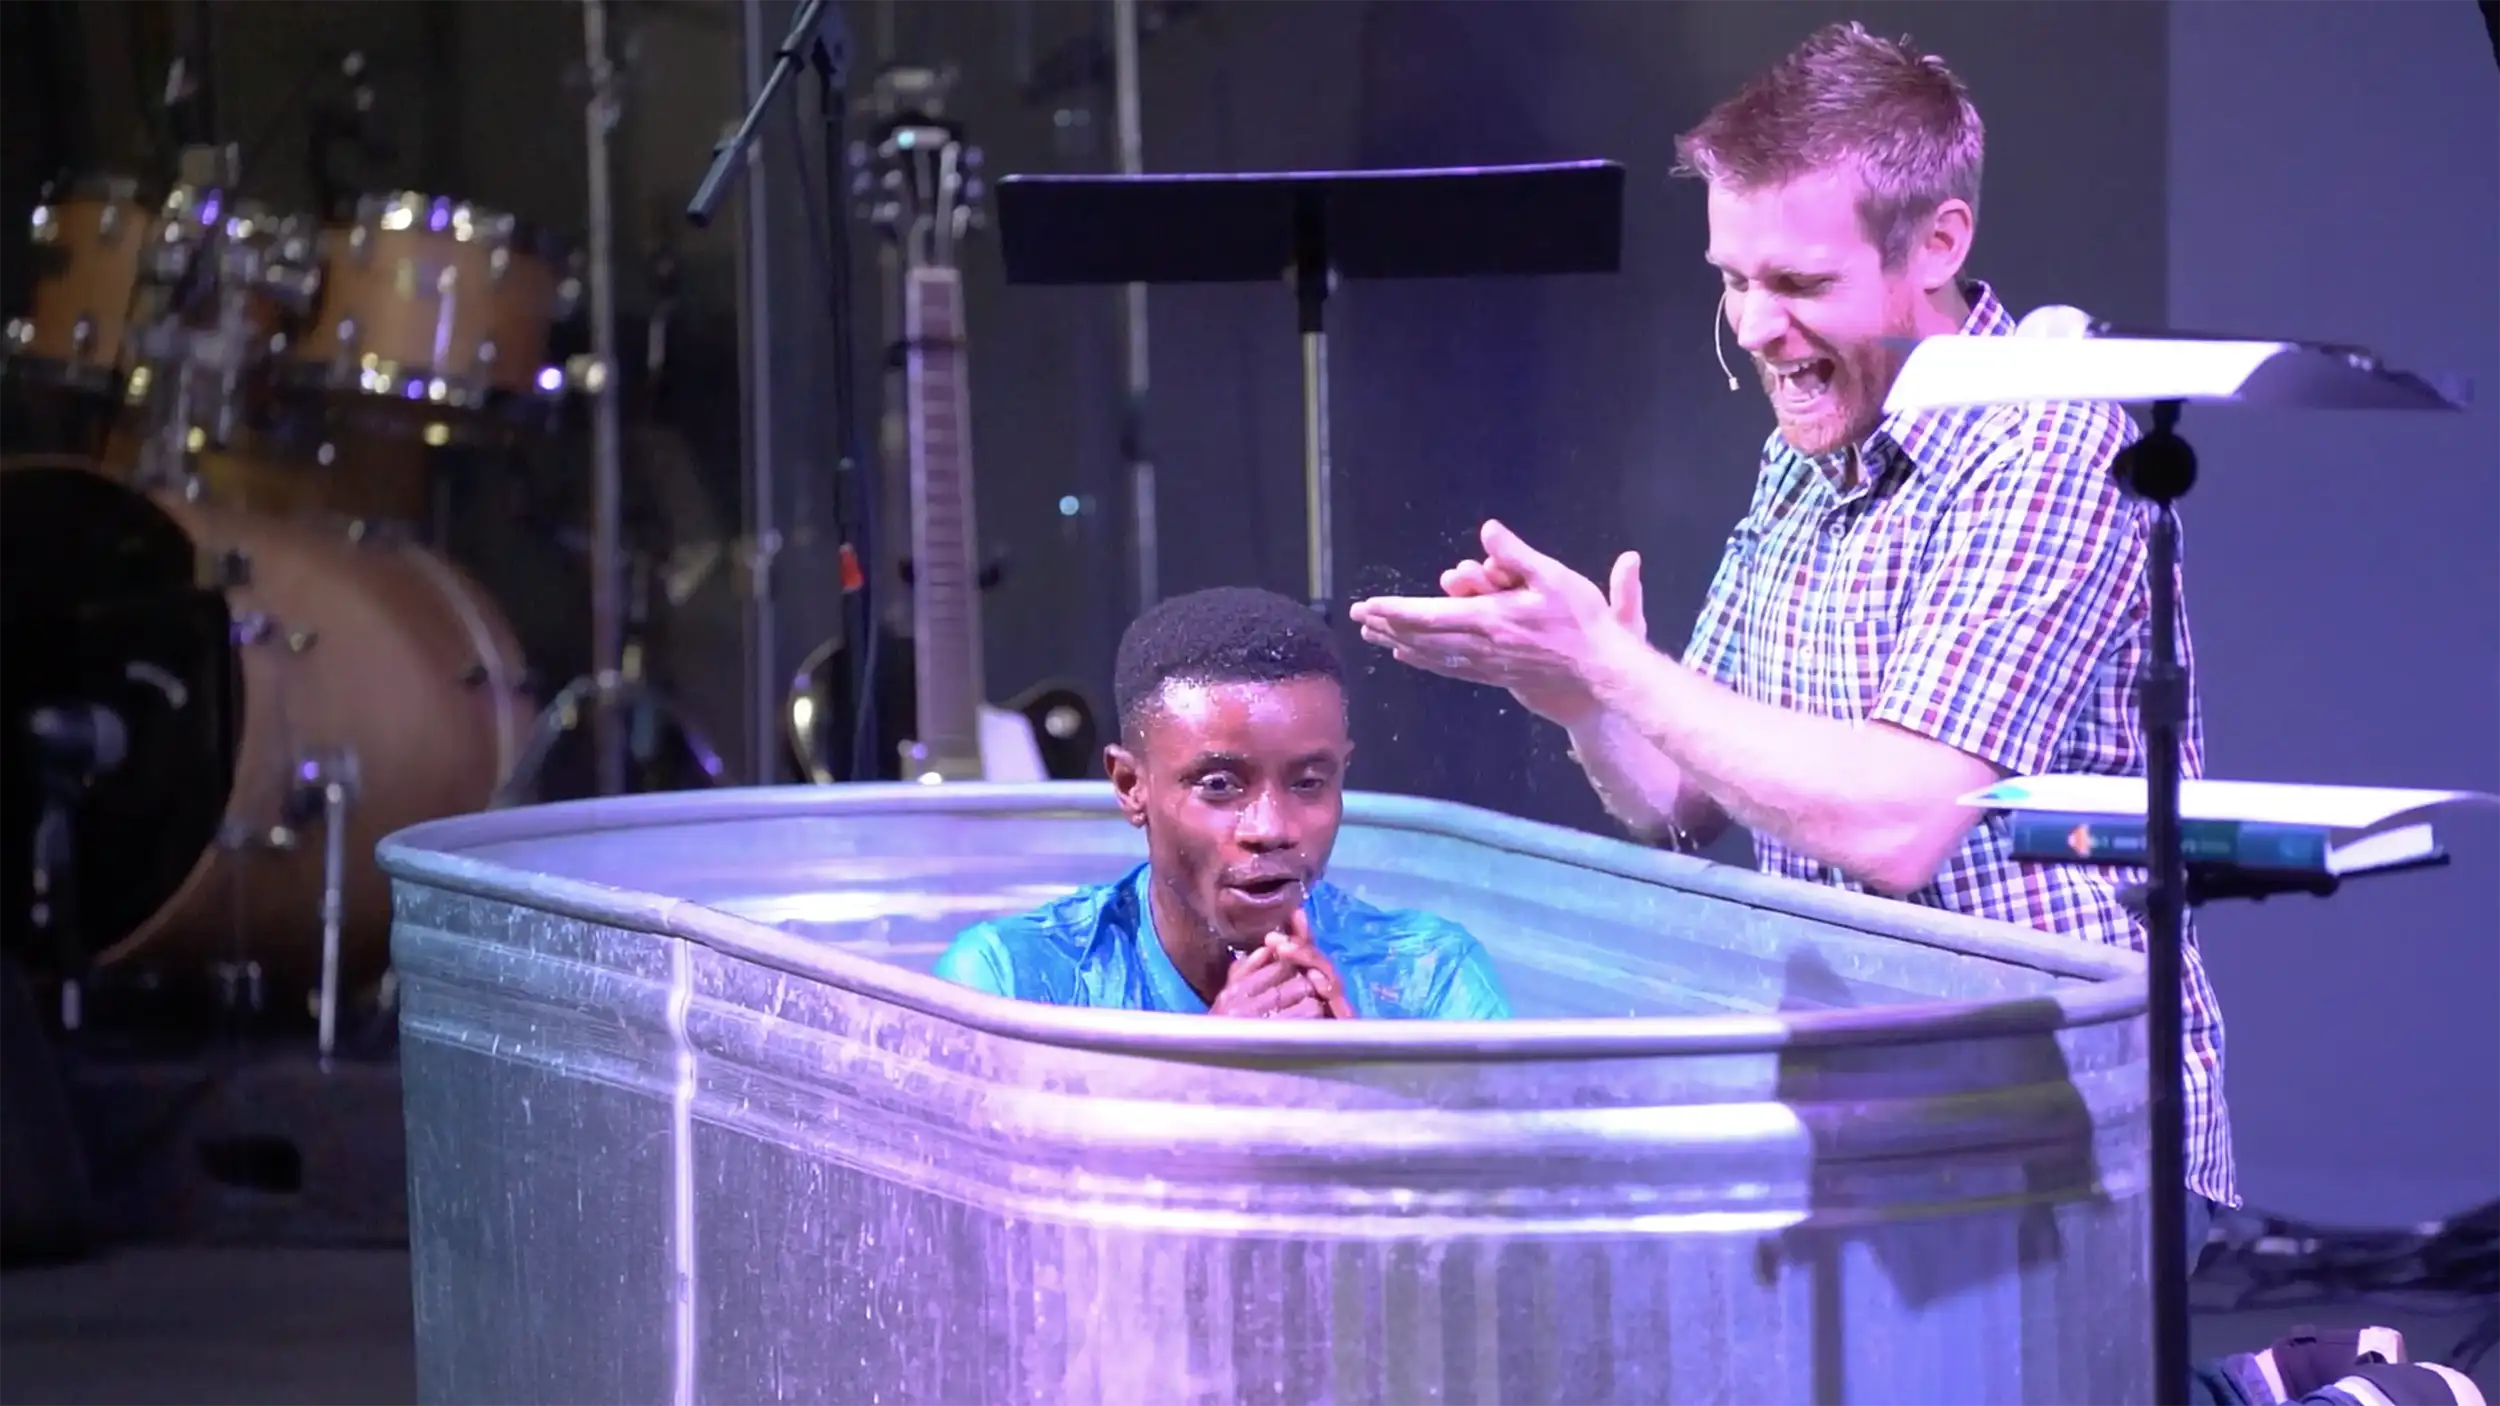 Pastor David baptising a new believer